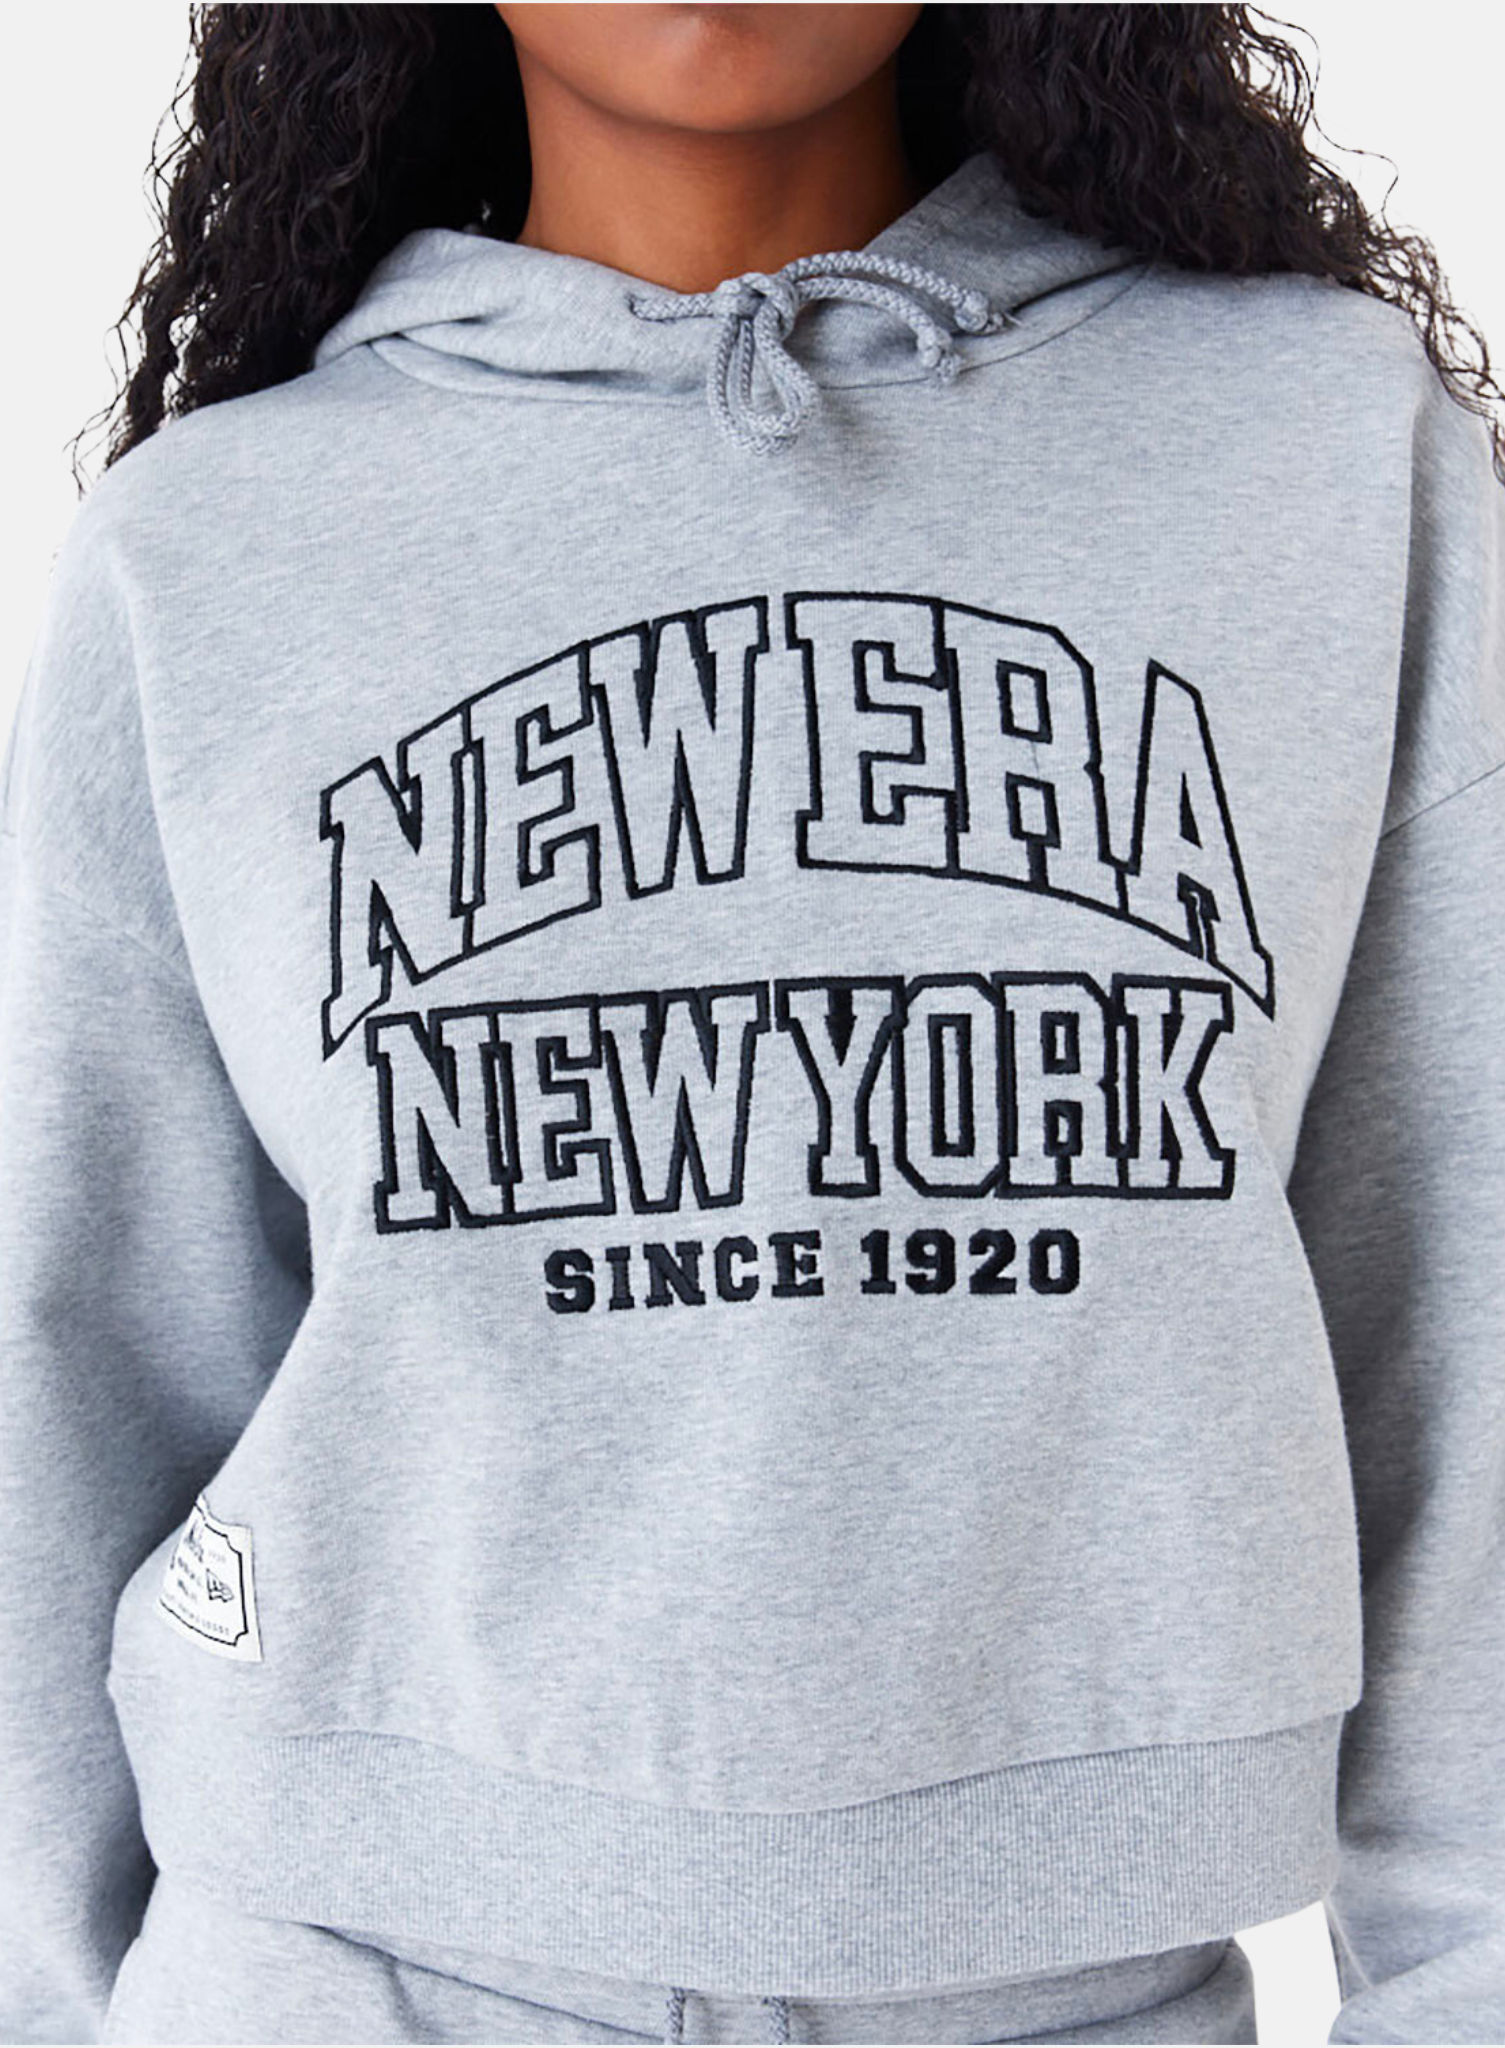 New Era Womens Arch Wordmark Crop Pullover Hoodie Grey - Hympala Store 